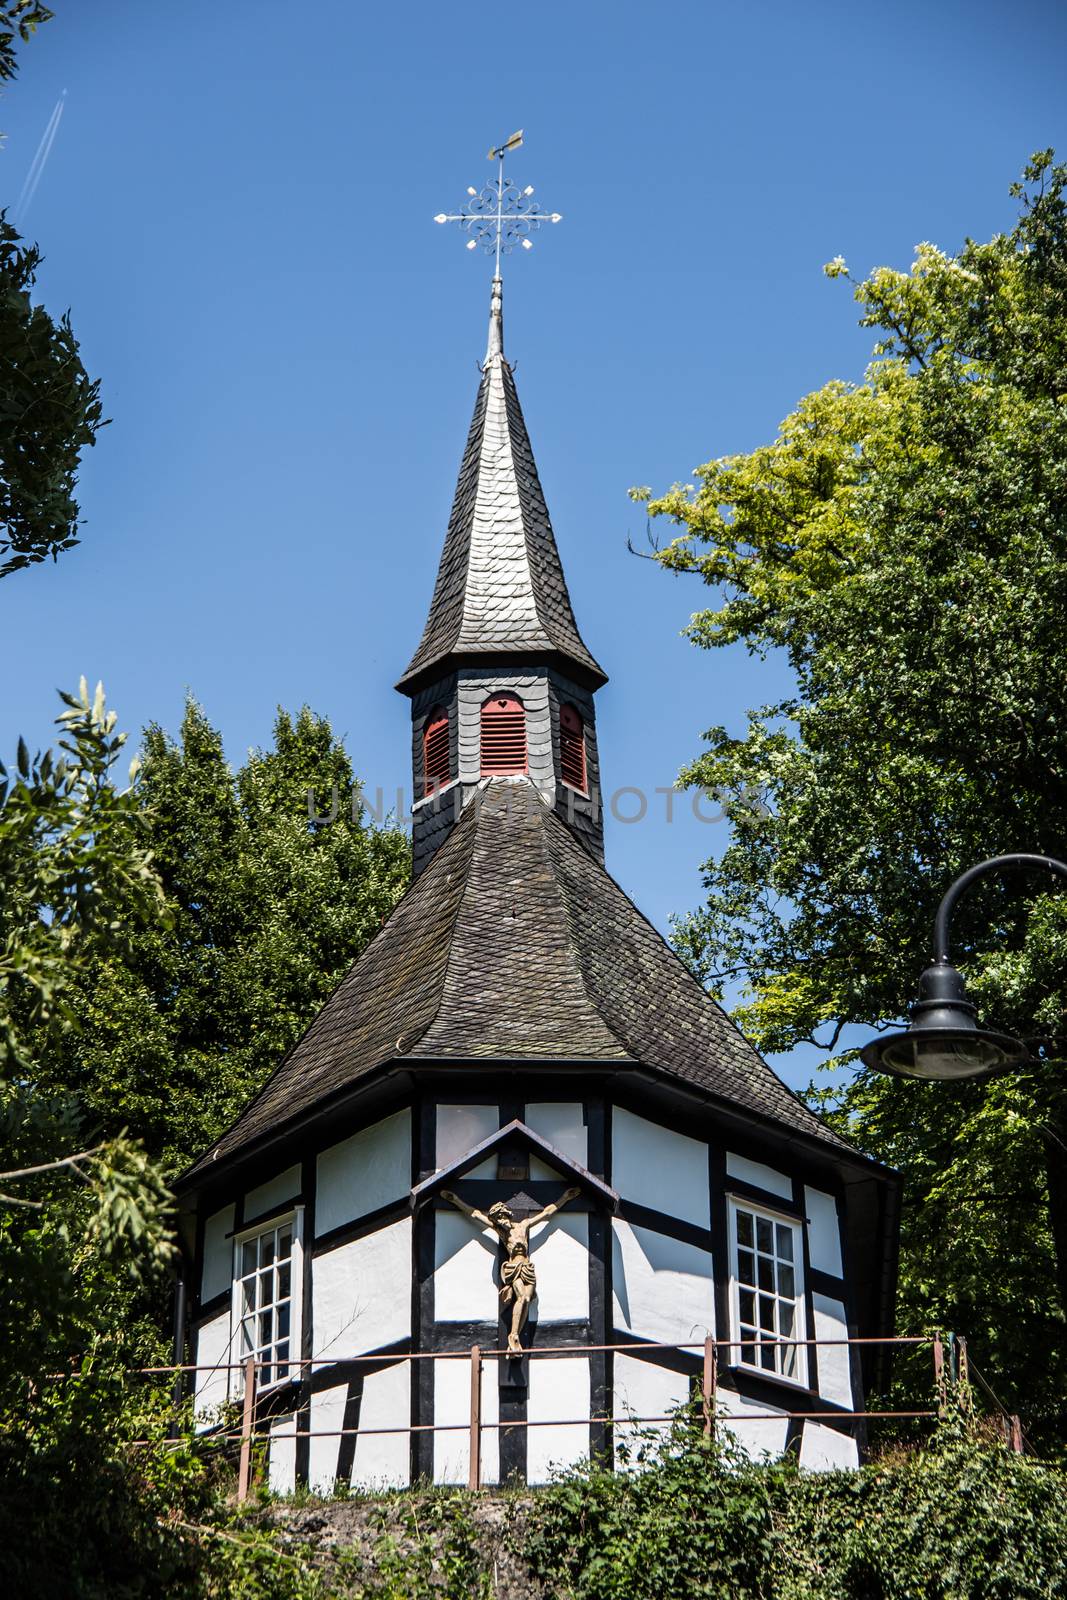 Half-timbered Heisterkapelle in Wissen by Dr-Lange